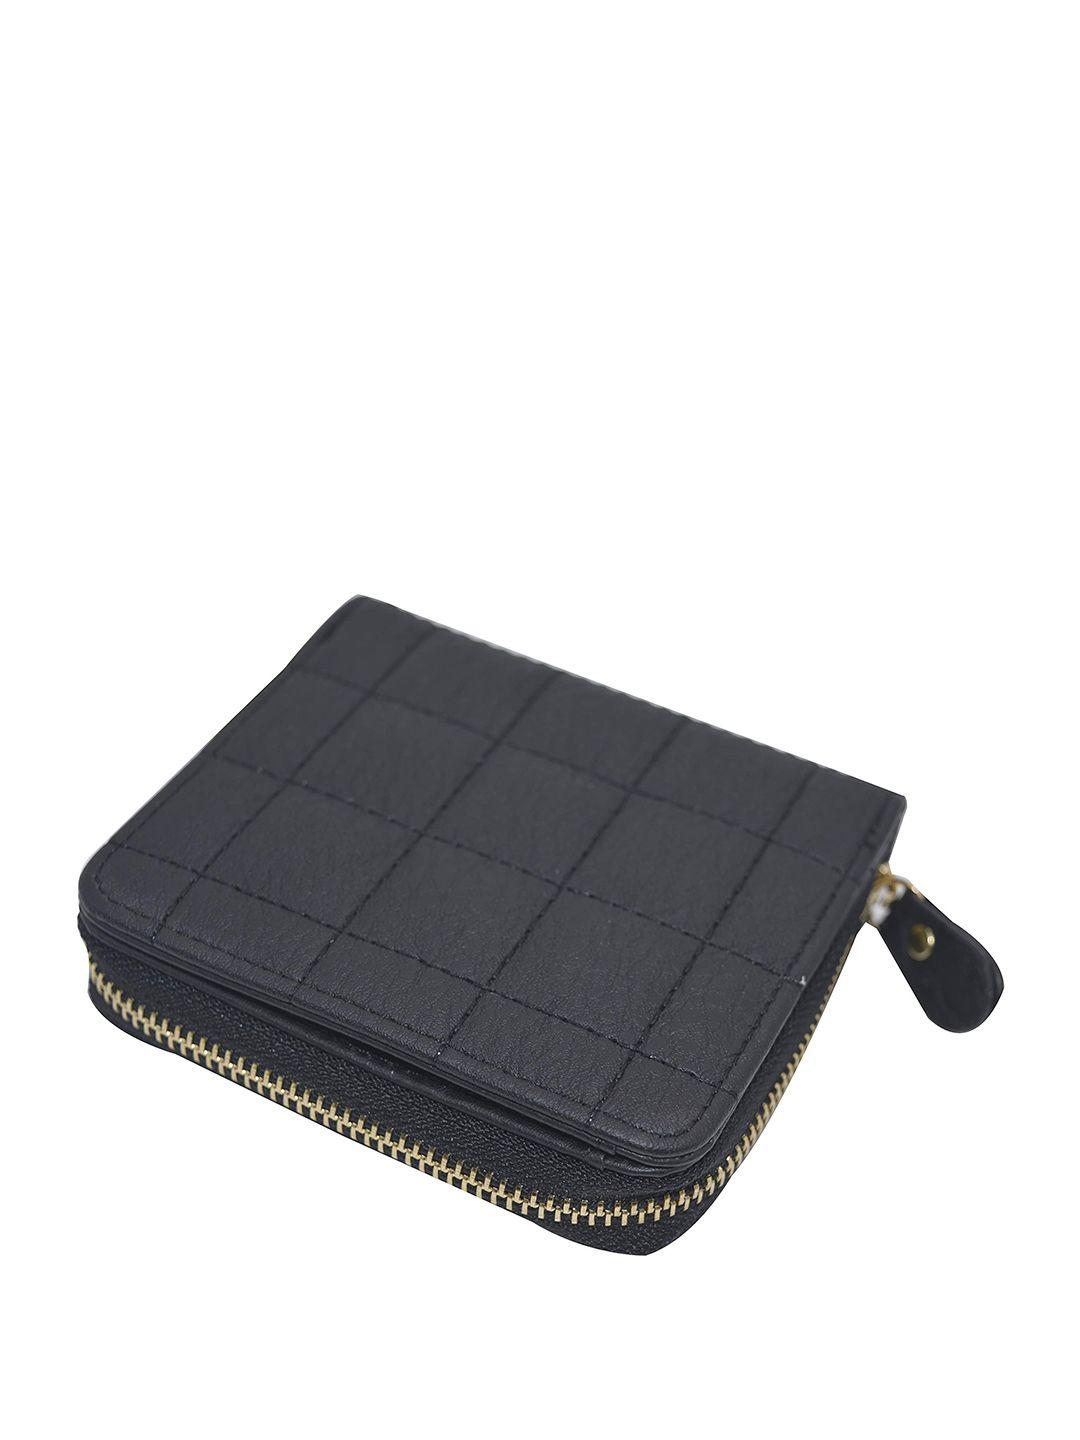 syga women leather zip around wallet